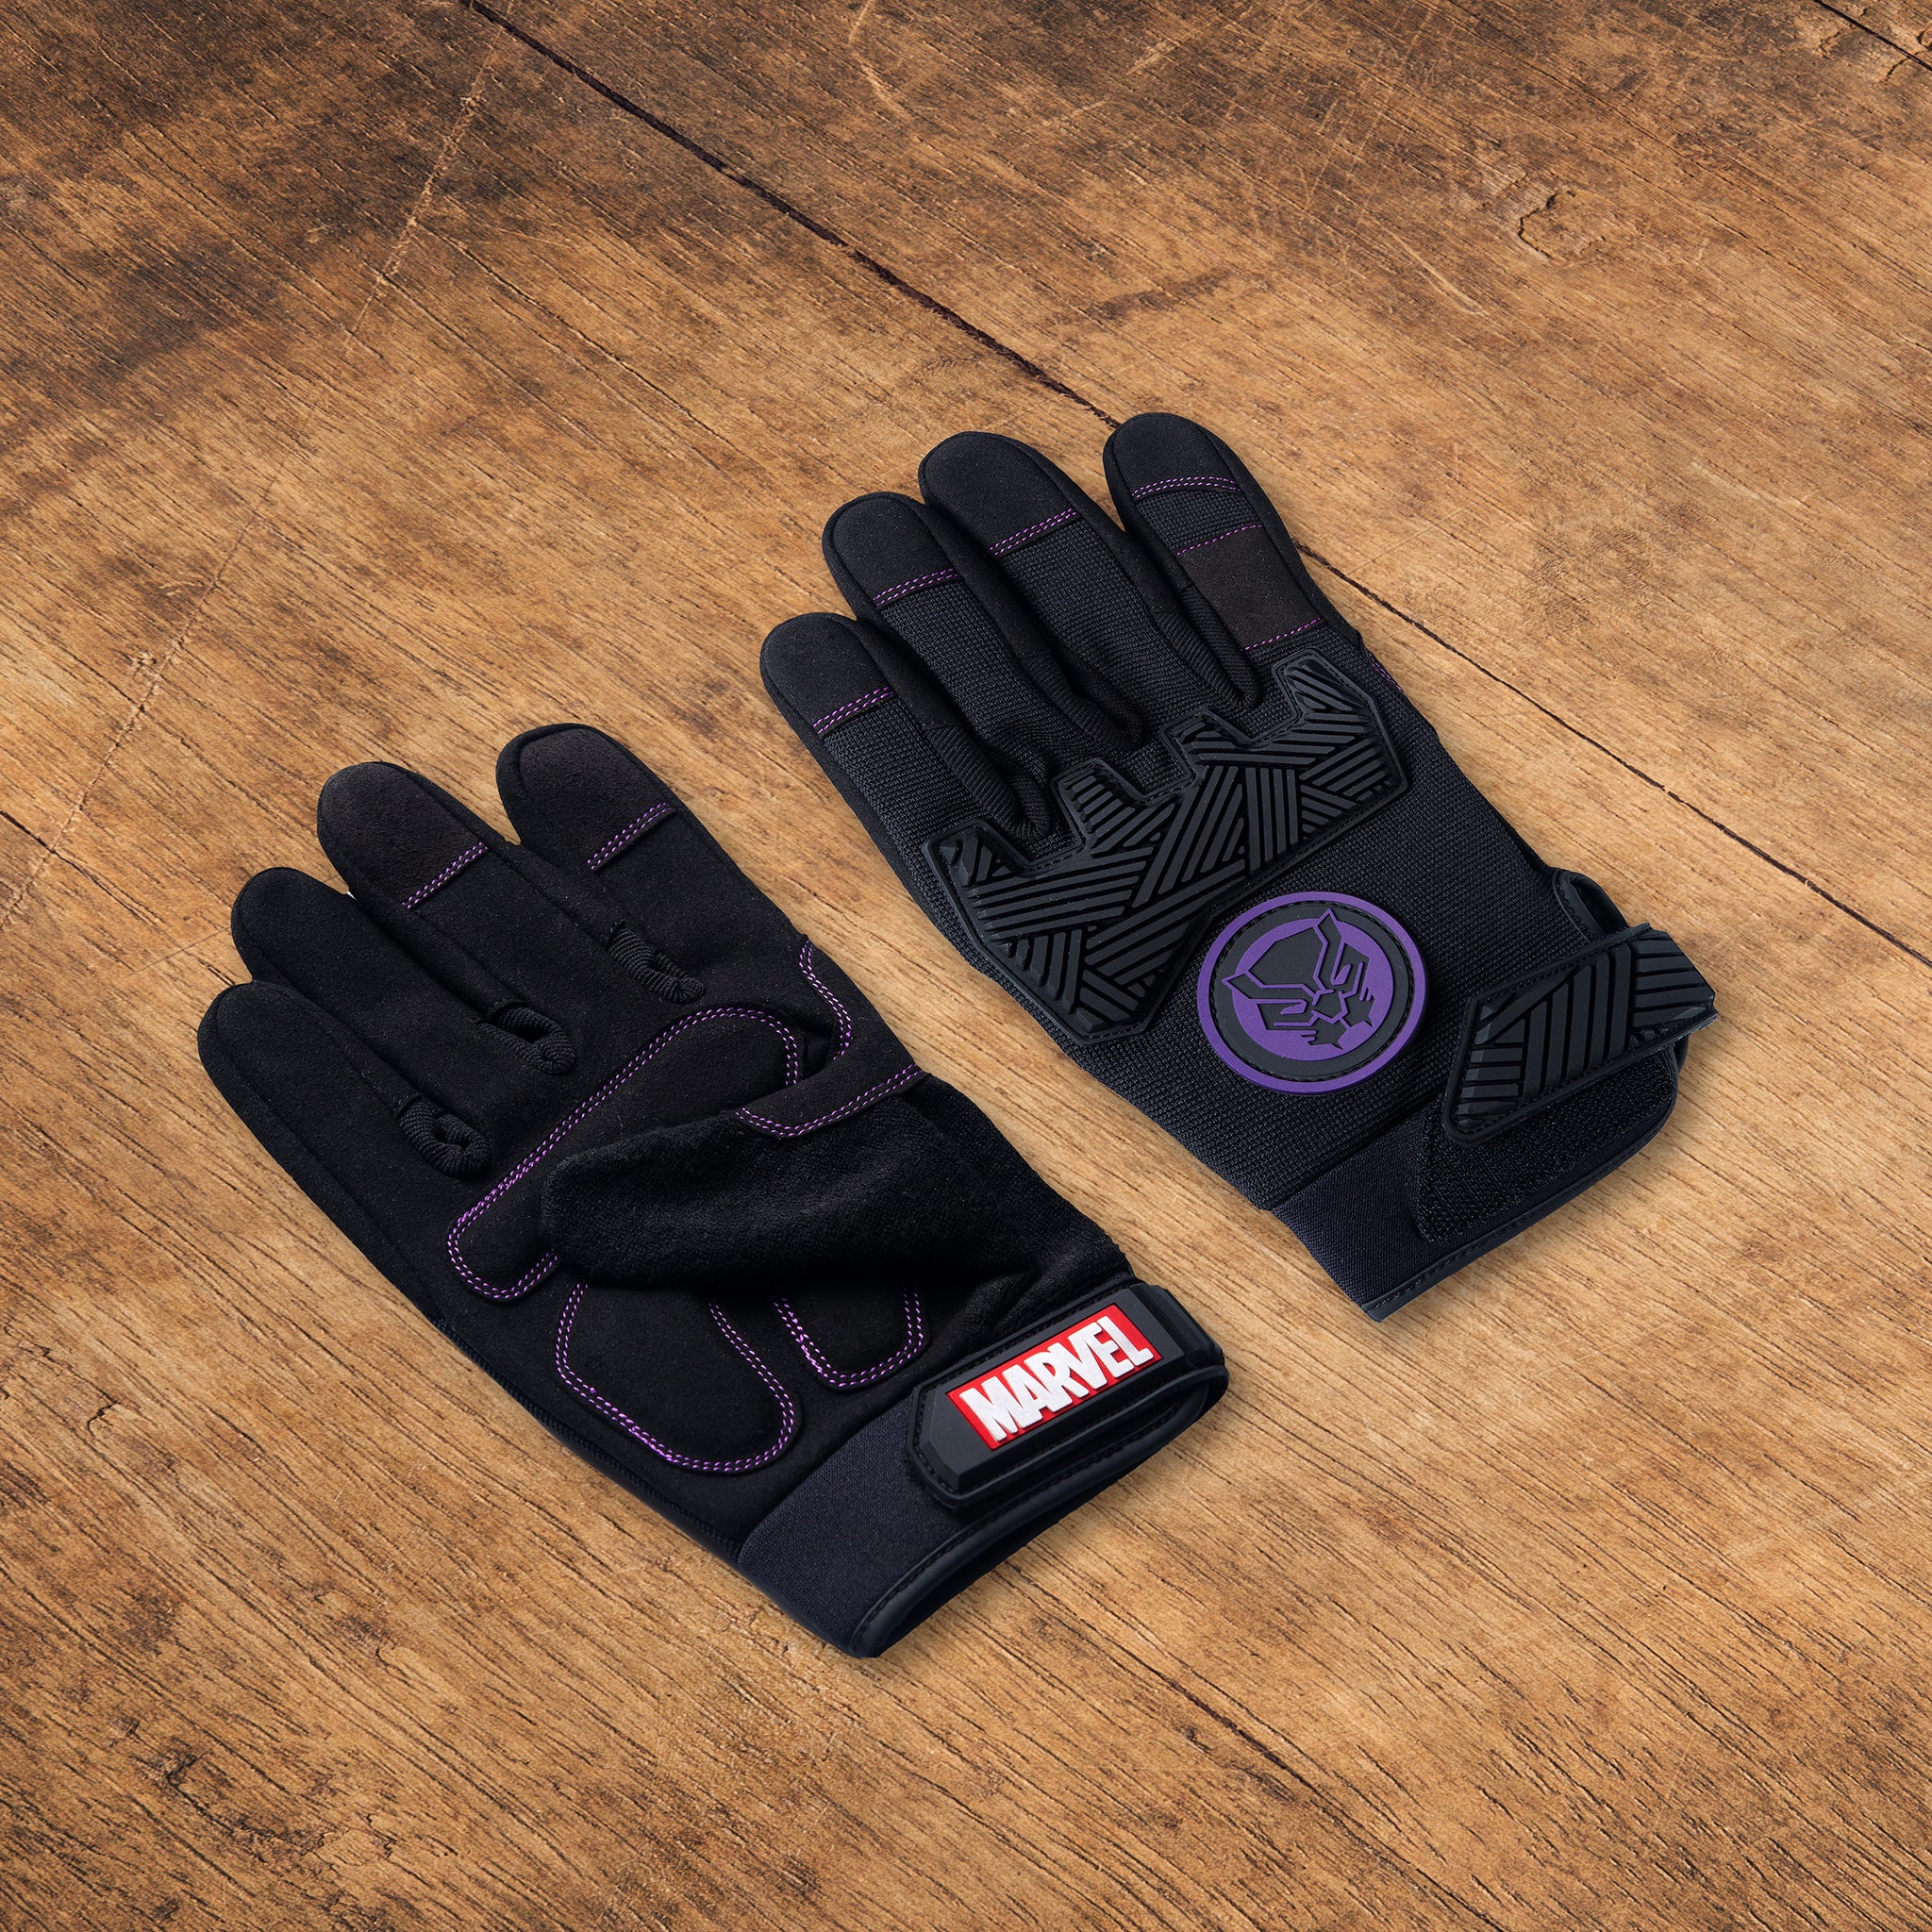 Mechanix Wear Original Multipurpose Work Gloves Black Mens Sz Large New